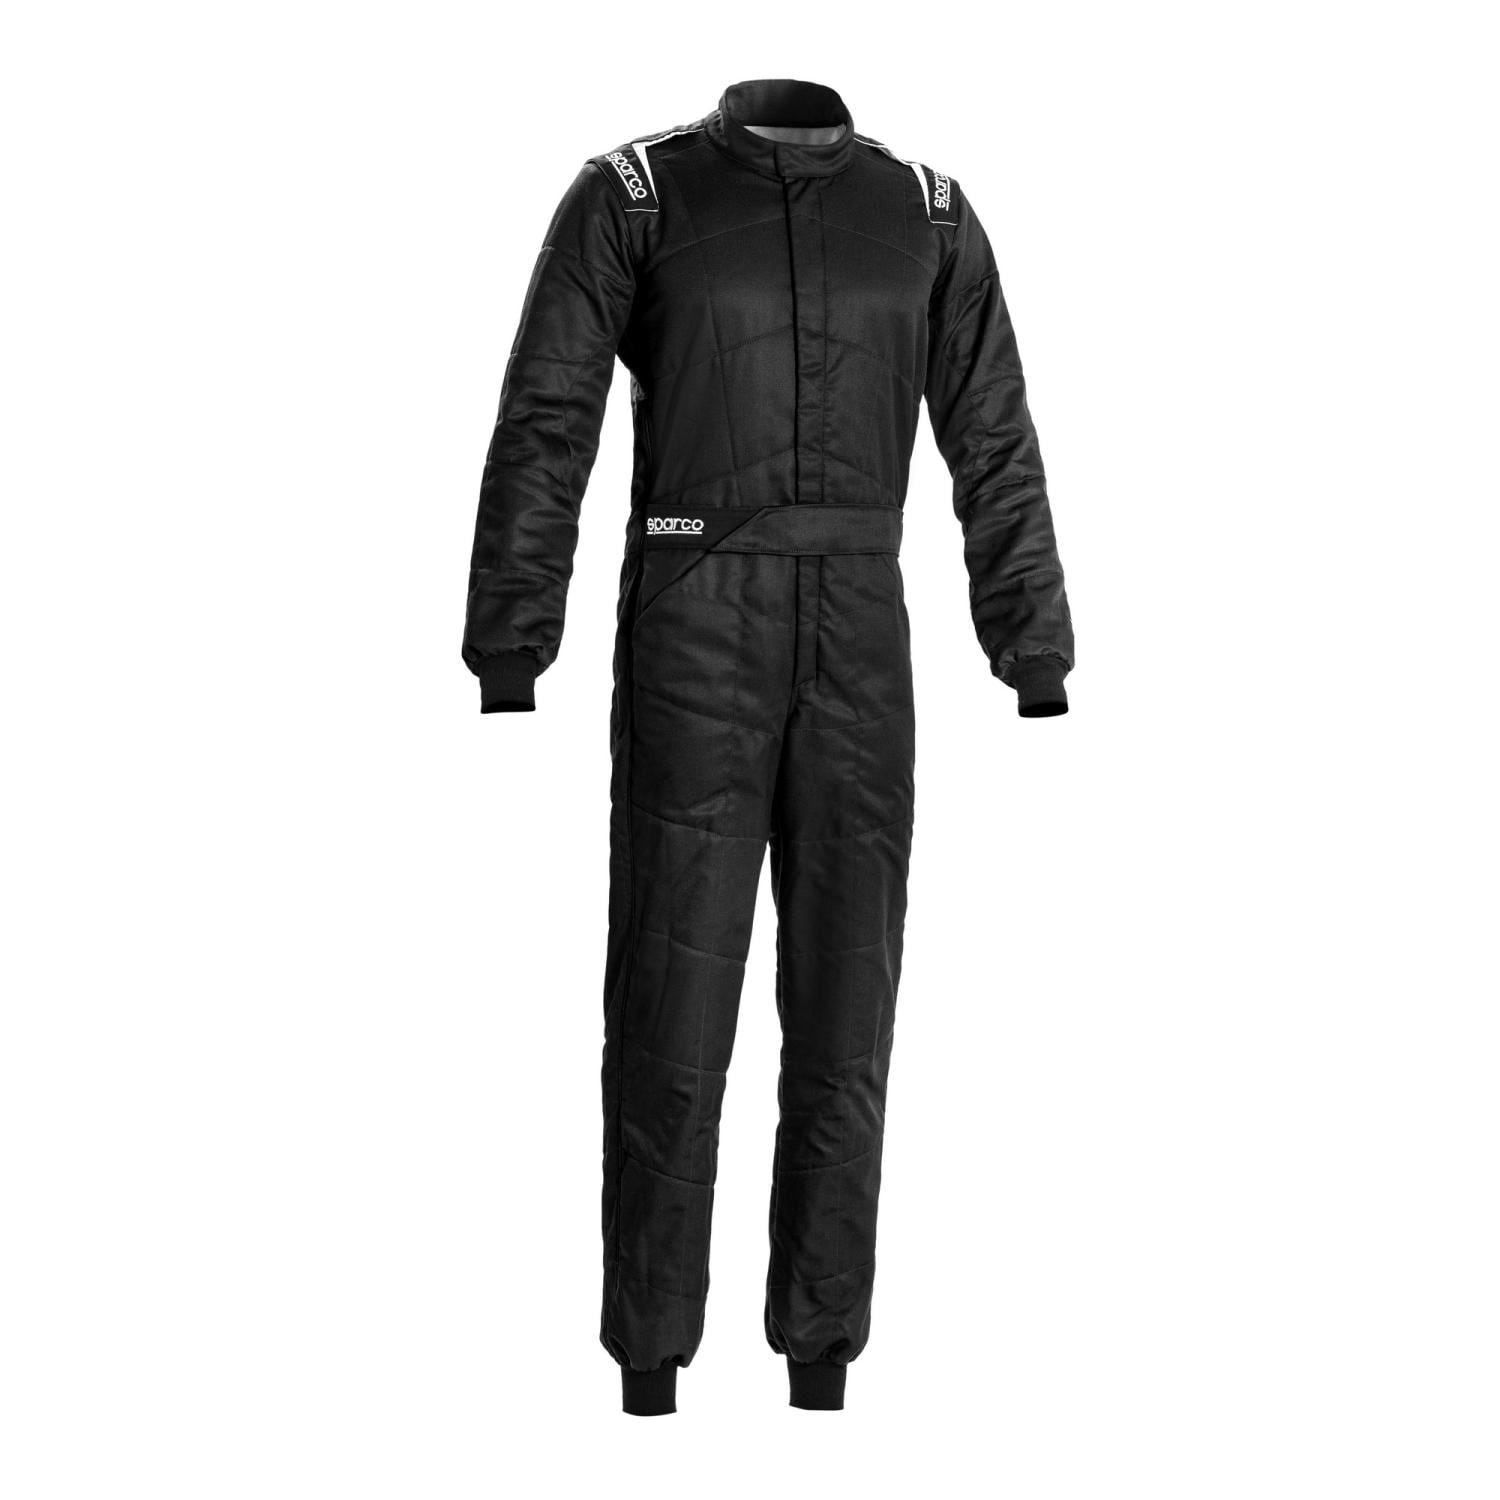 Racing Suit Sparco Sprin R566t Black